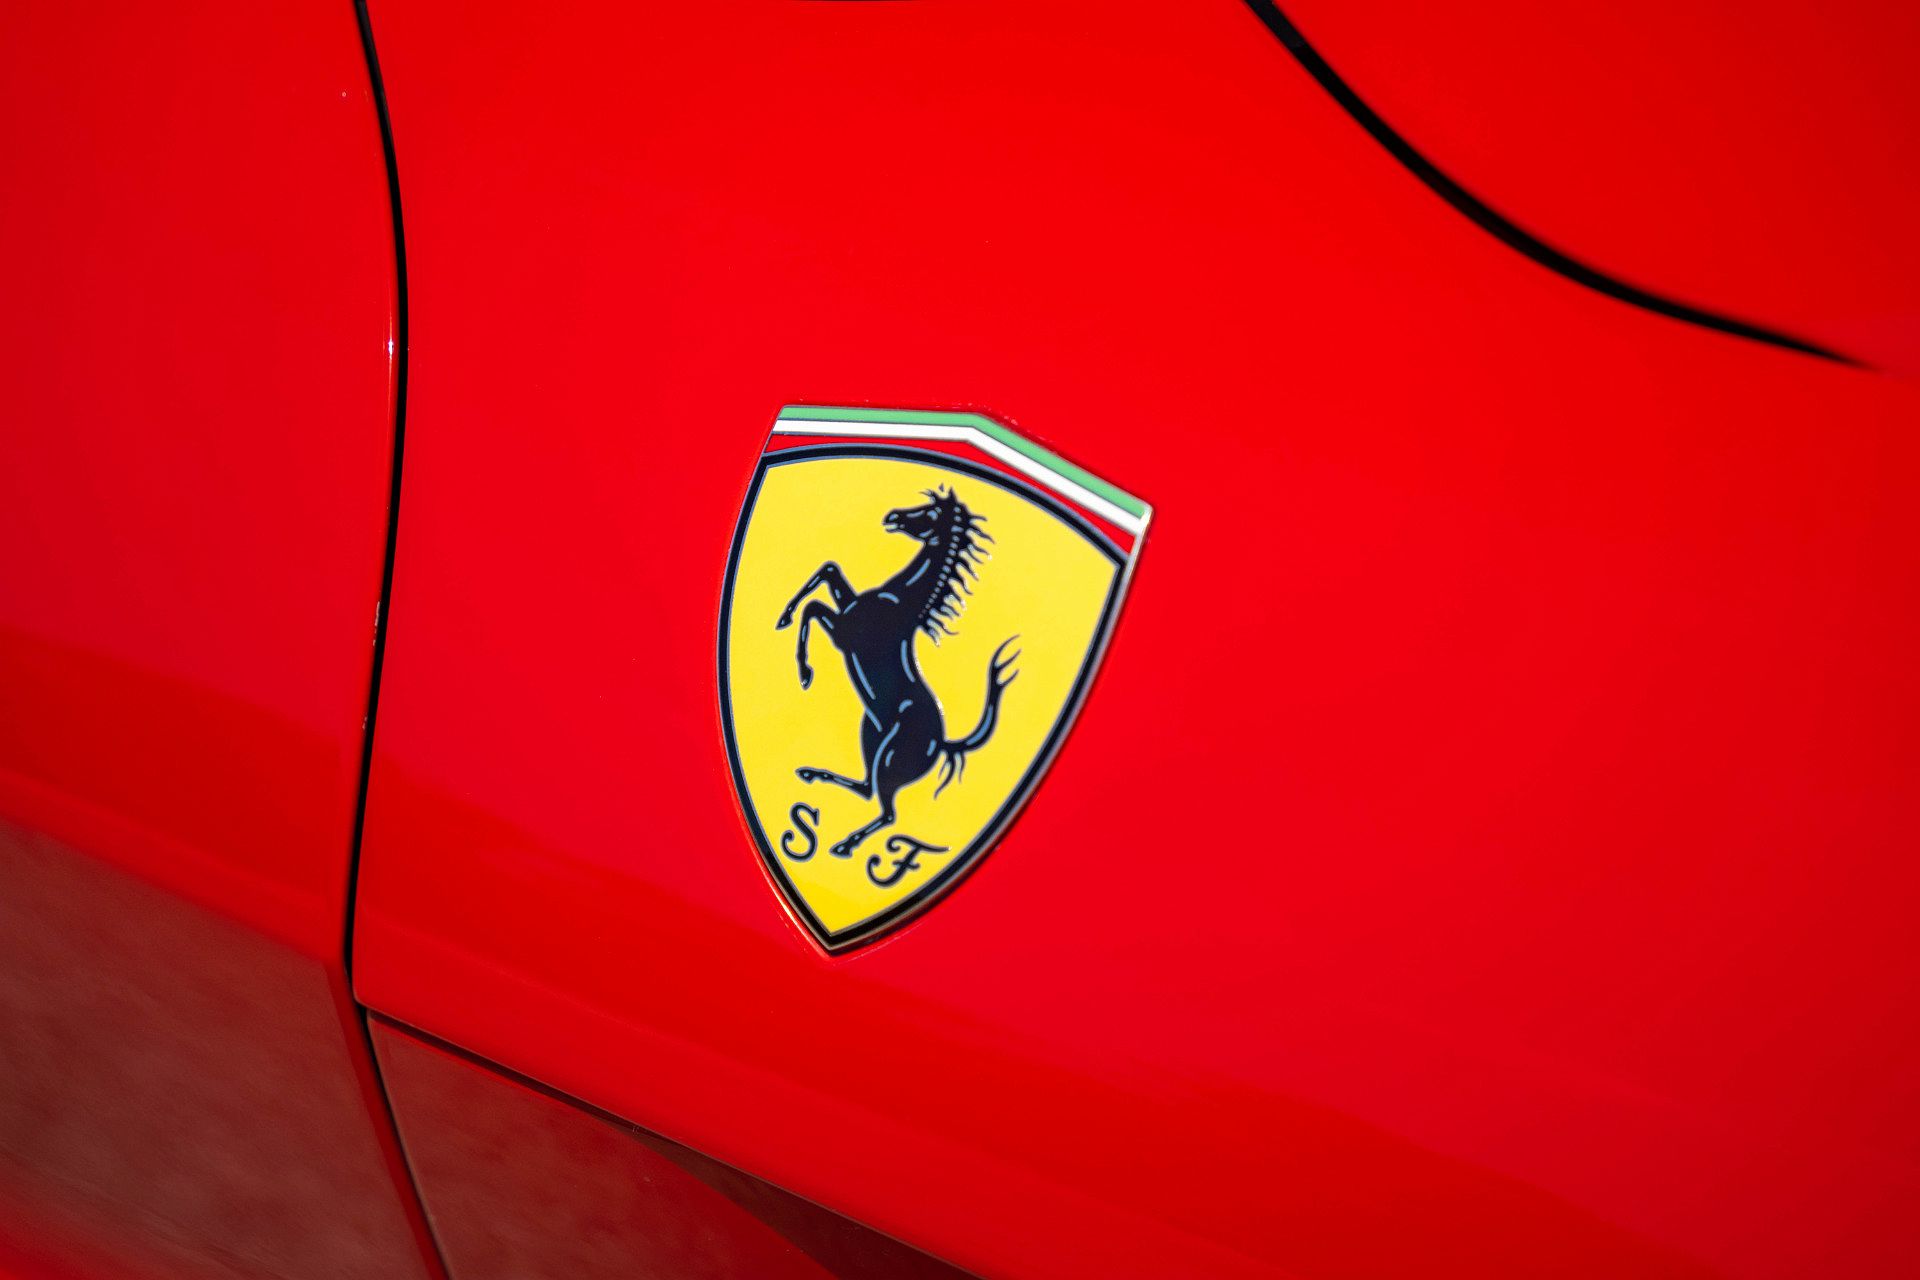 2014 Ferrari F12 Berlinetta image 11